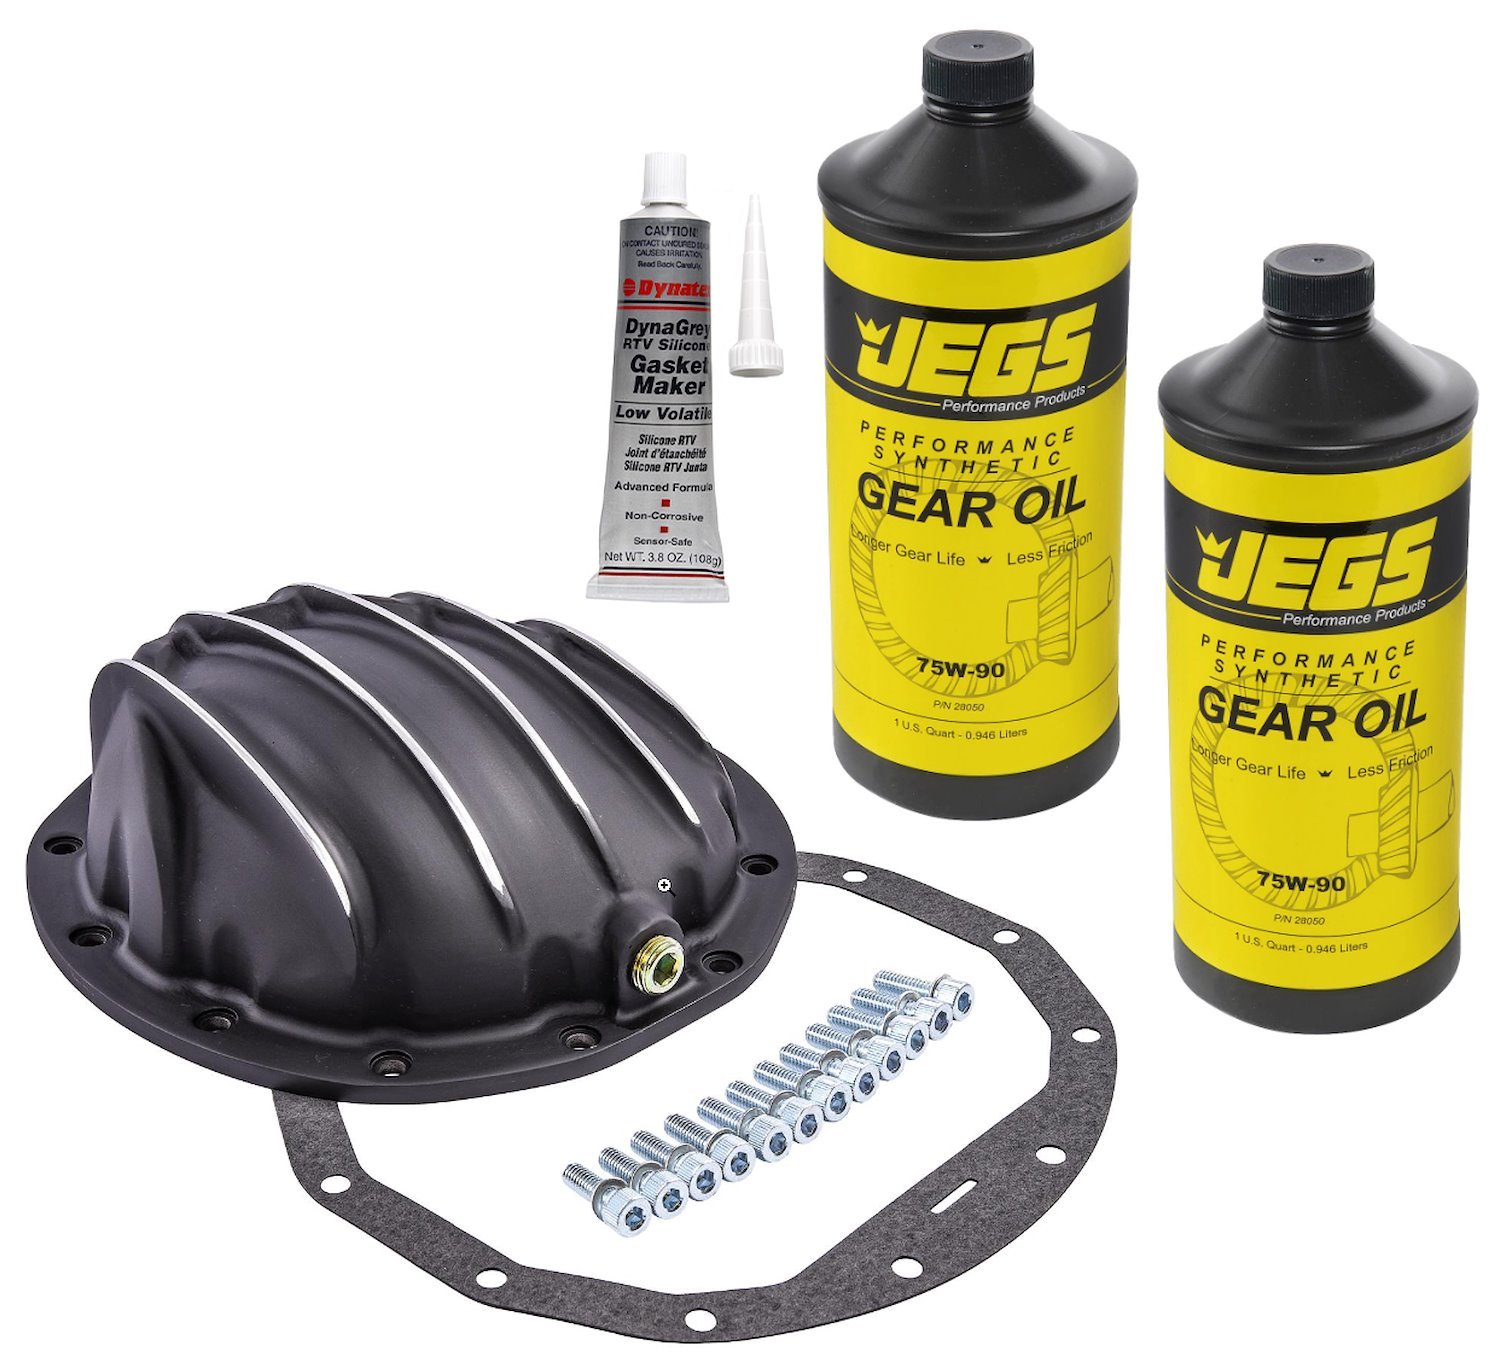 Black Cast Aluminum Differential Cover & Gear Oil Kit